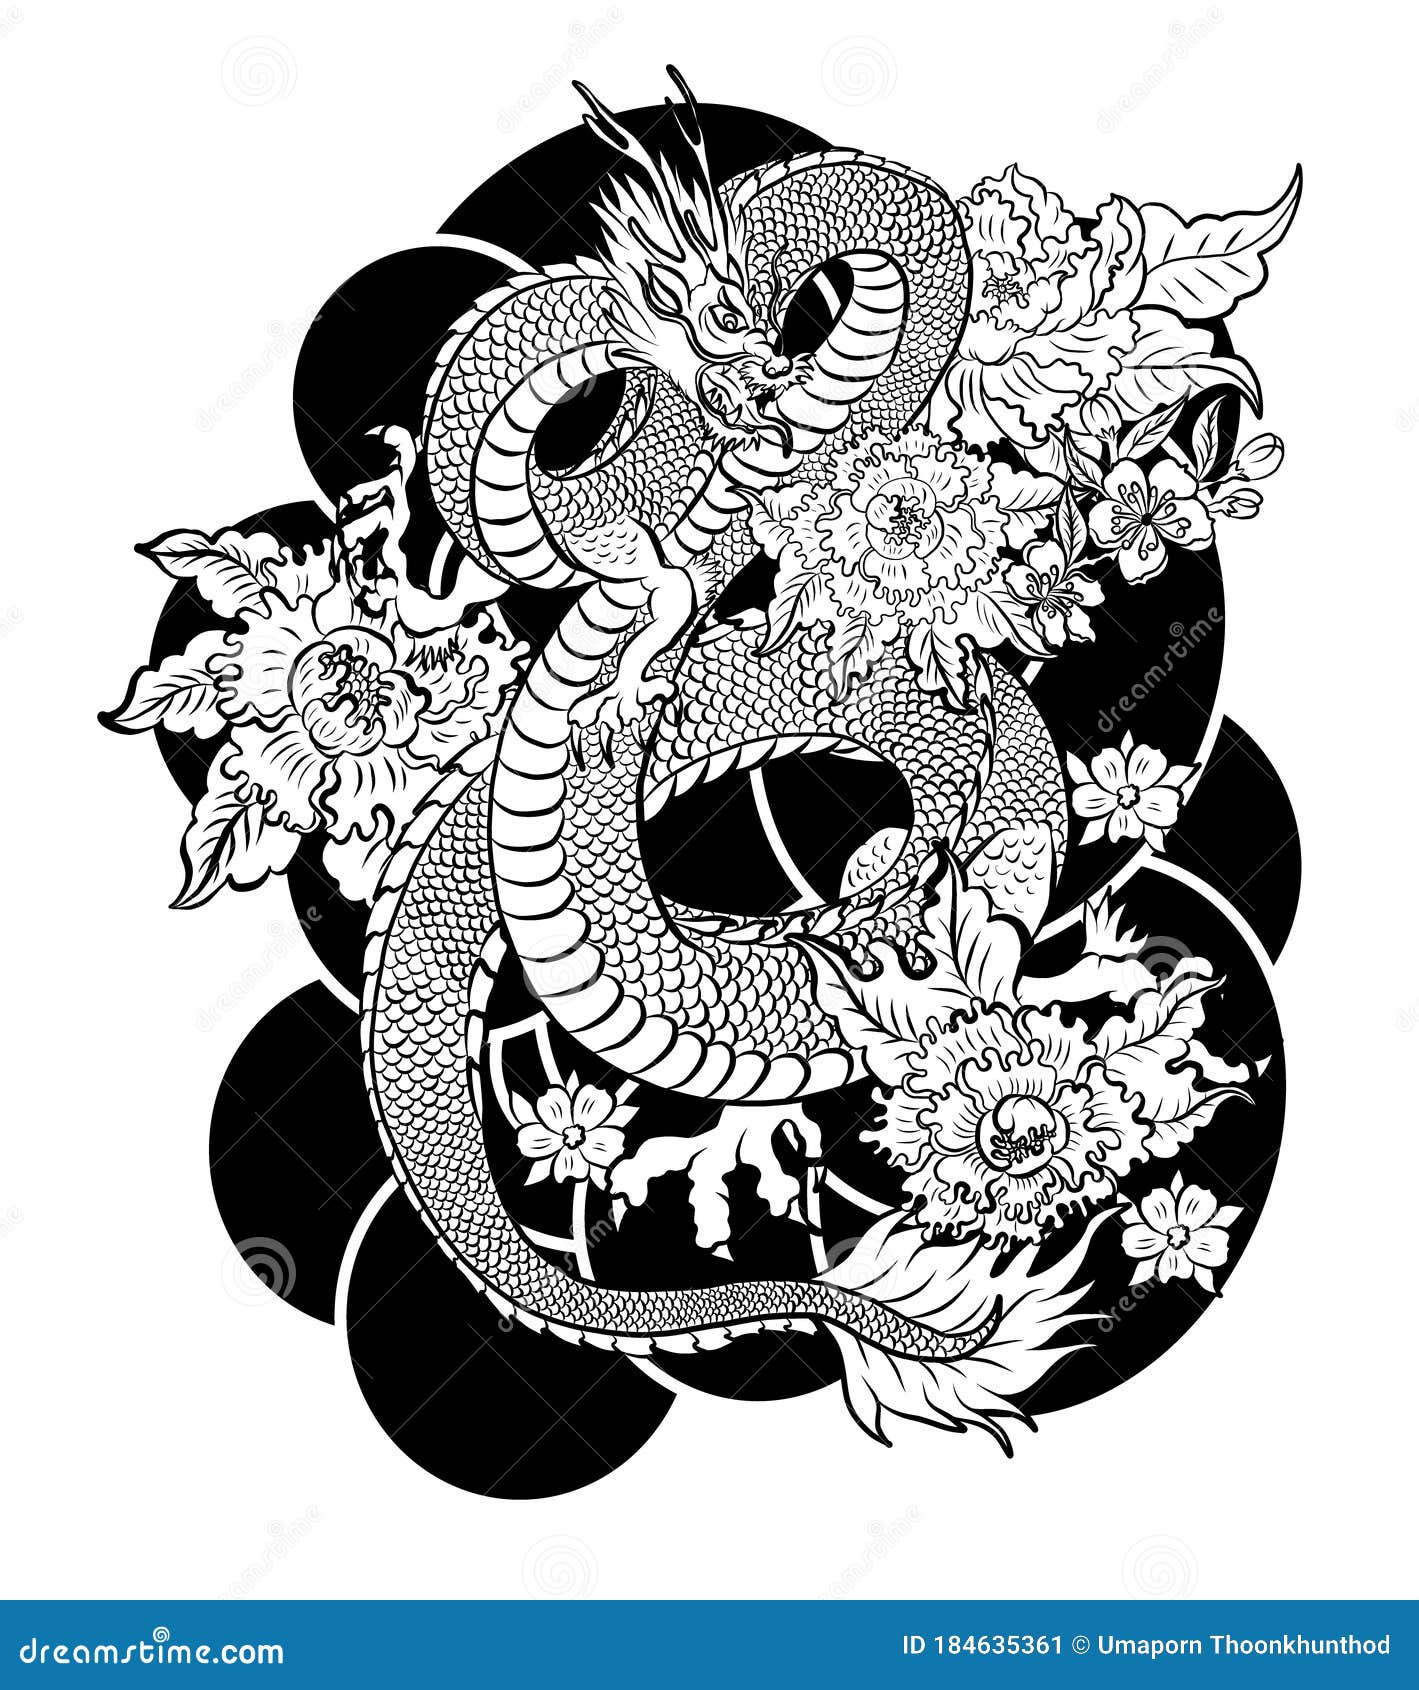 WoW ASIA SAMURAI DRAGON Tradition Kunst Bild Tattoo Art Designer TOP SHIRT XS/S